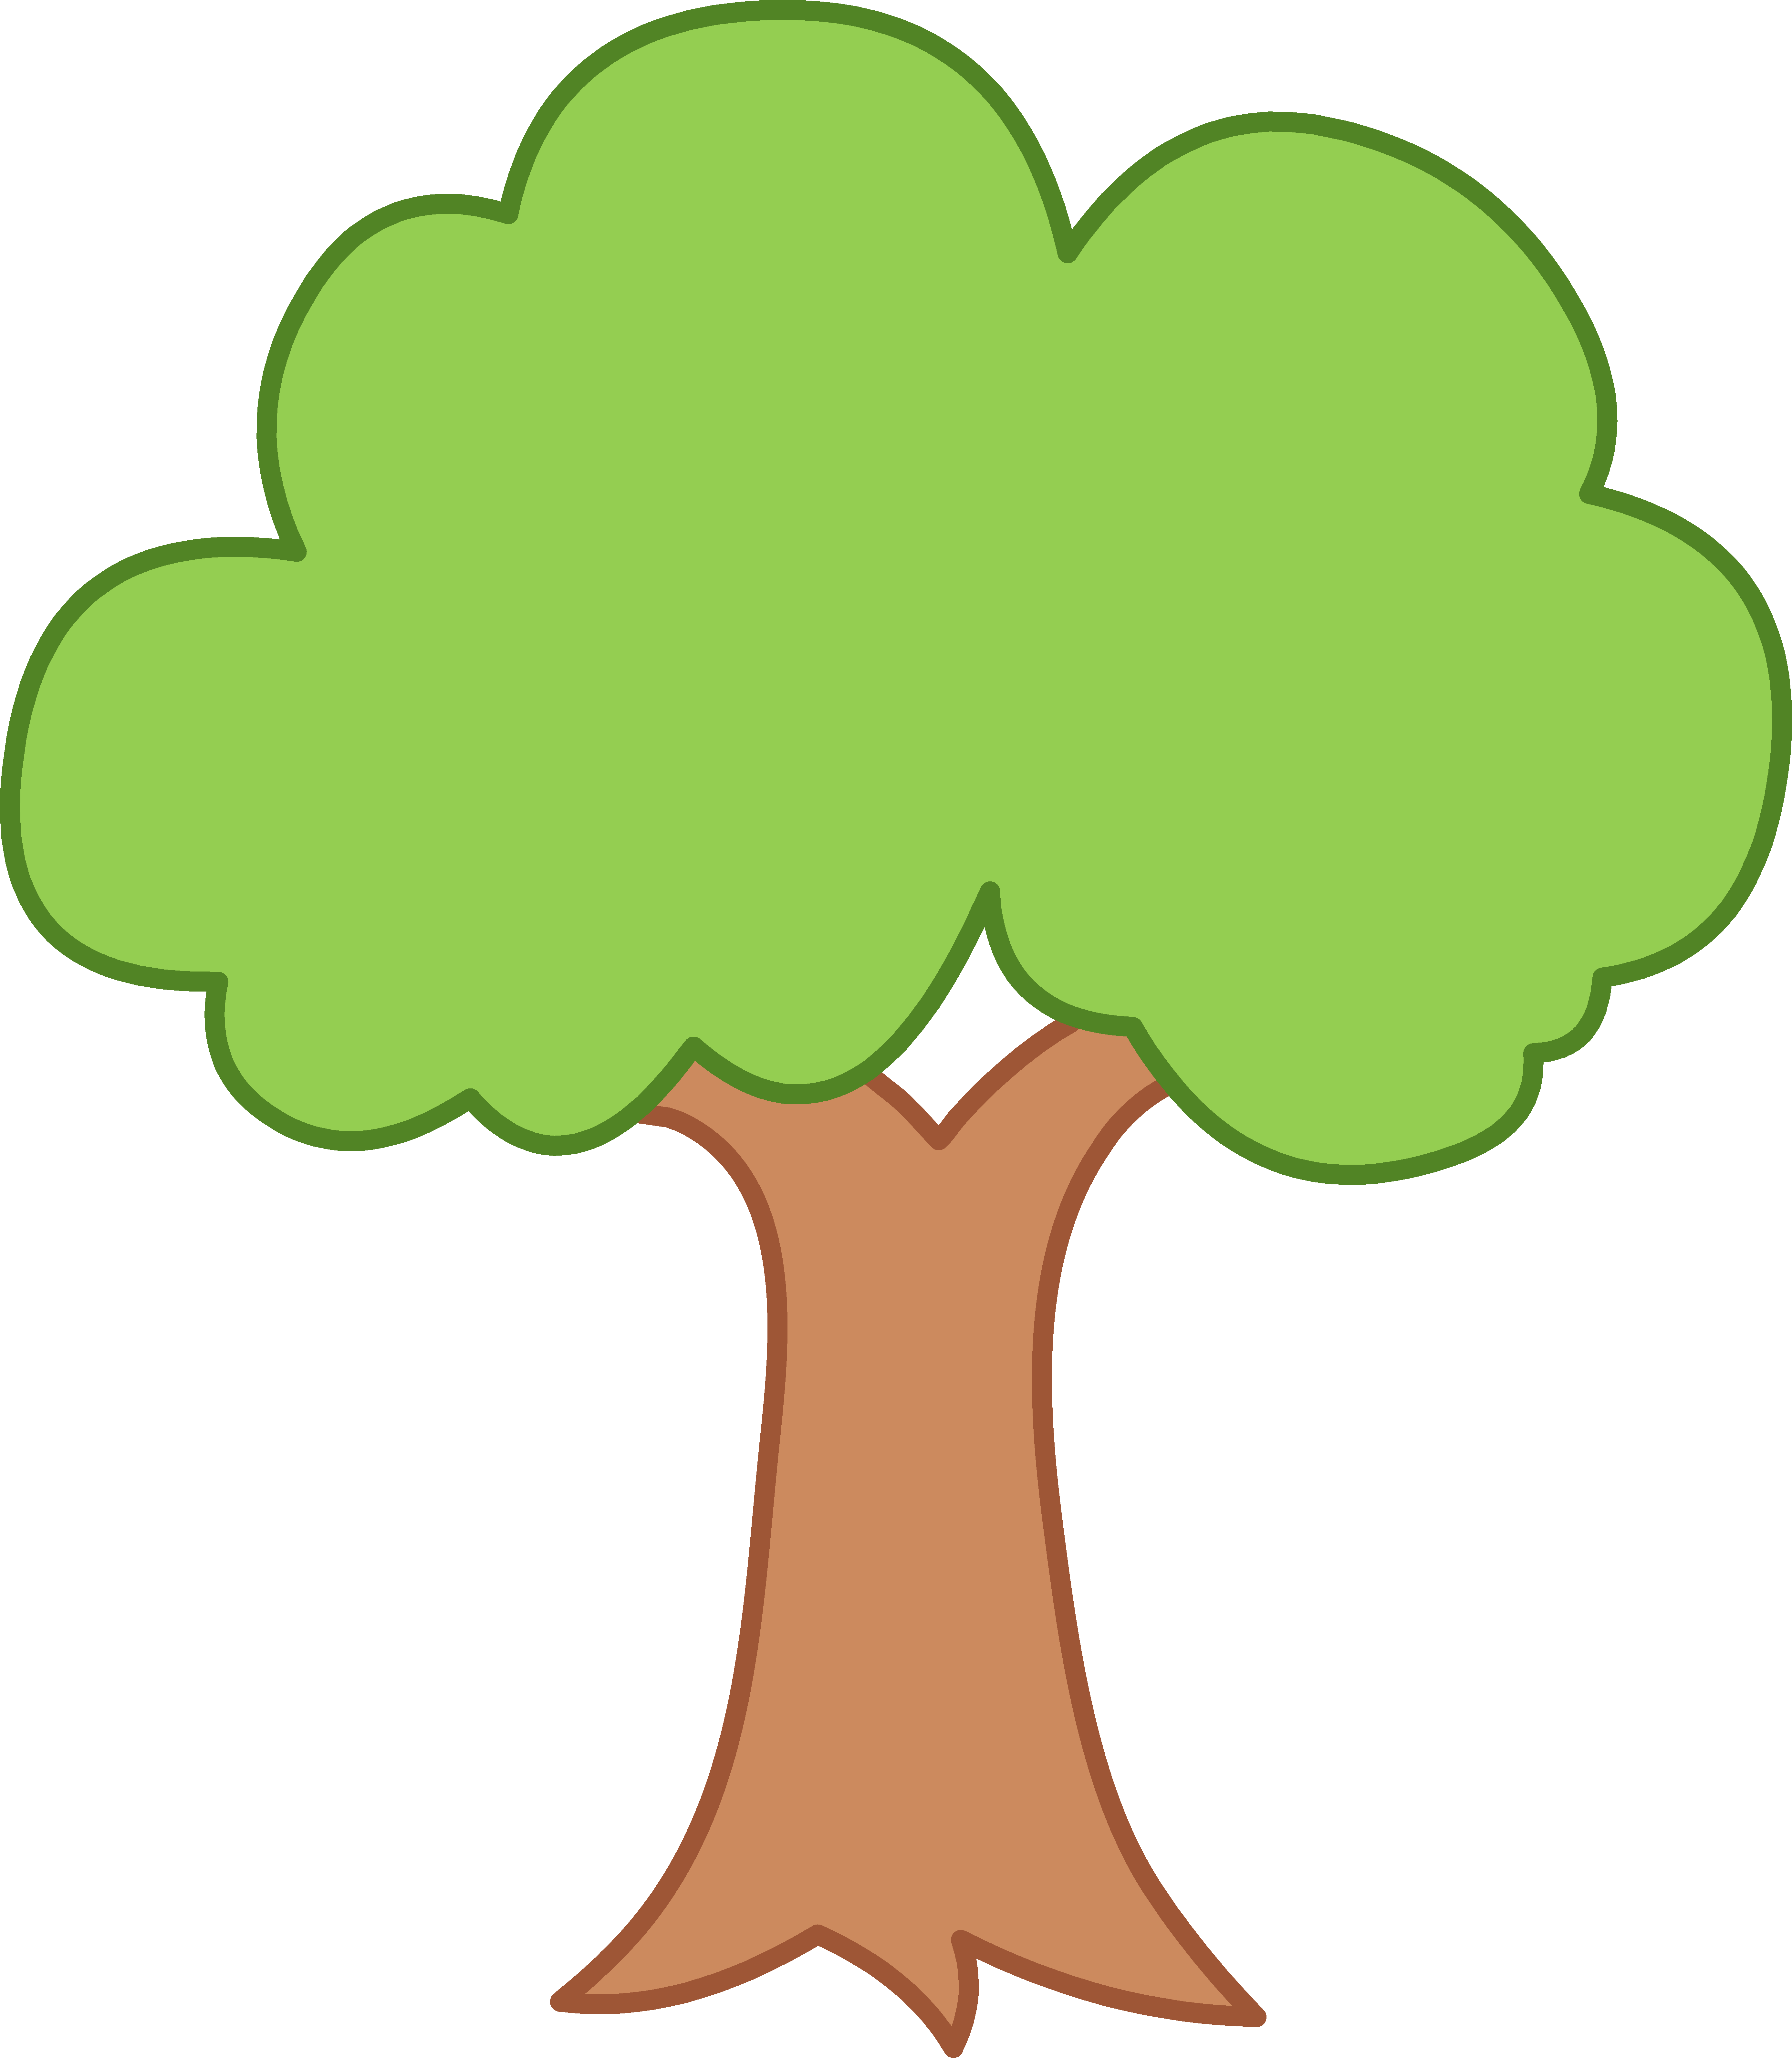 Simple Tree Illustration - ClipArt Best